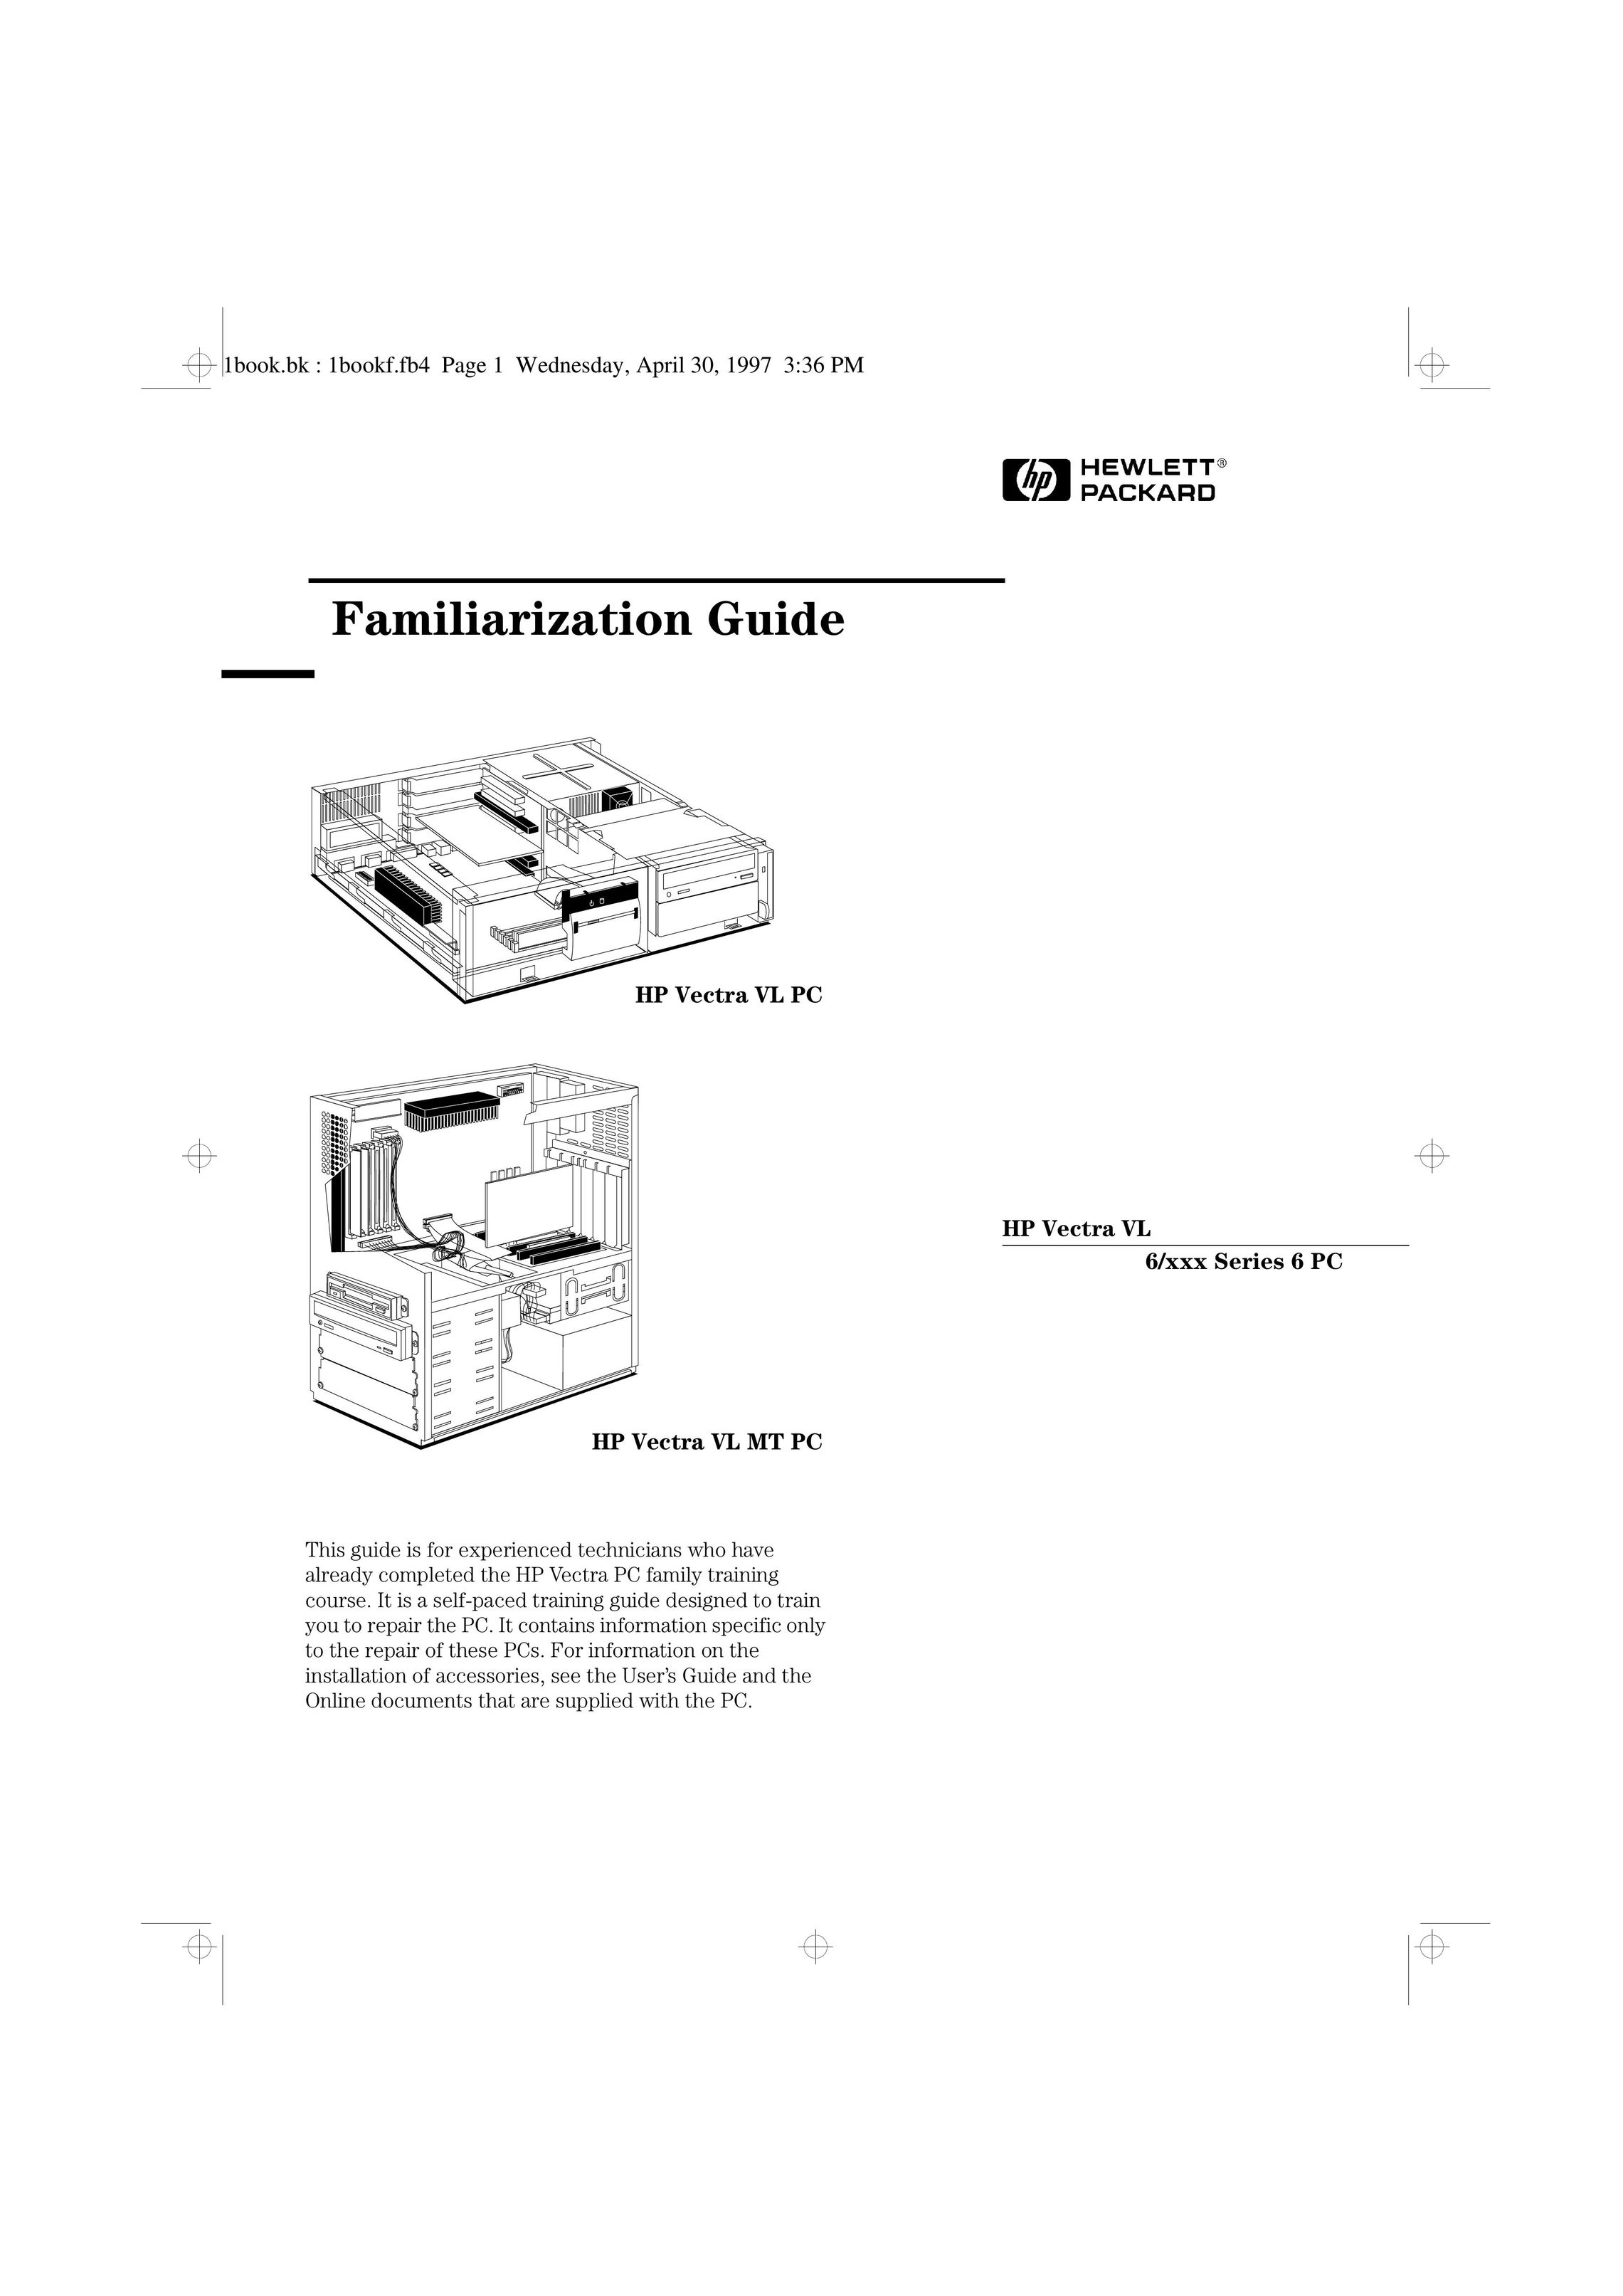 HP (Hewlett-Packard) 6 PC Personal Computer User Manual